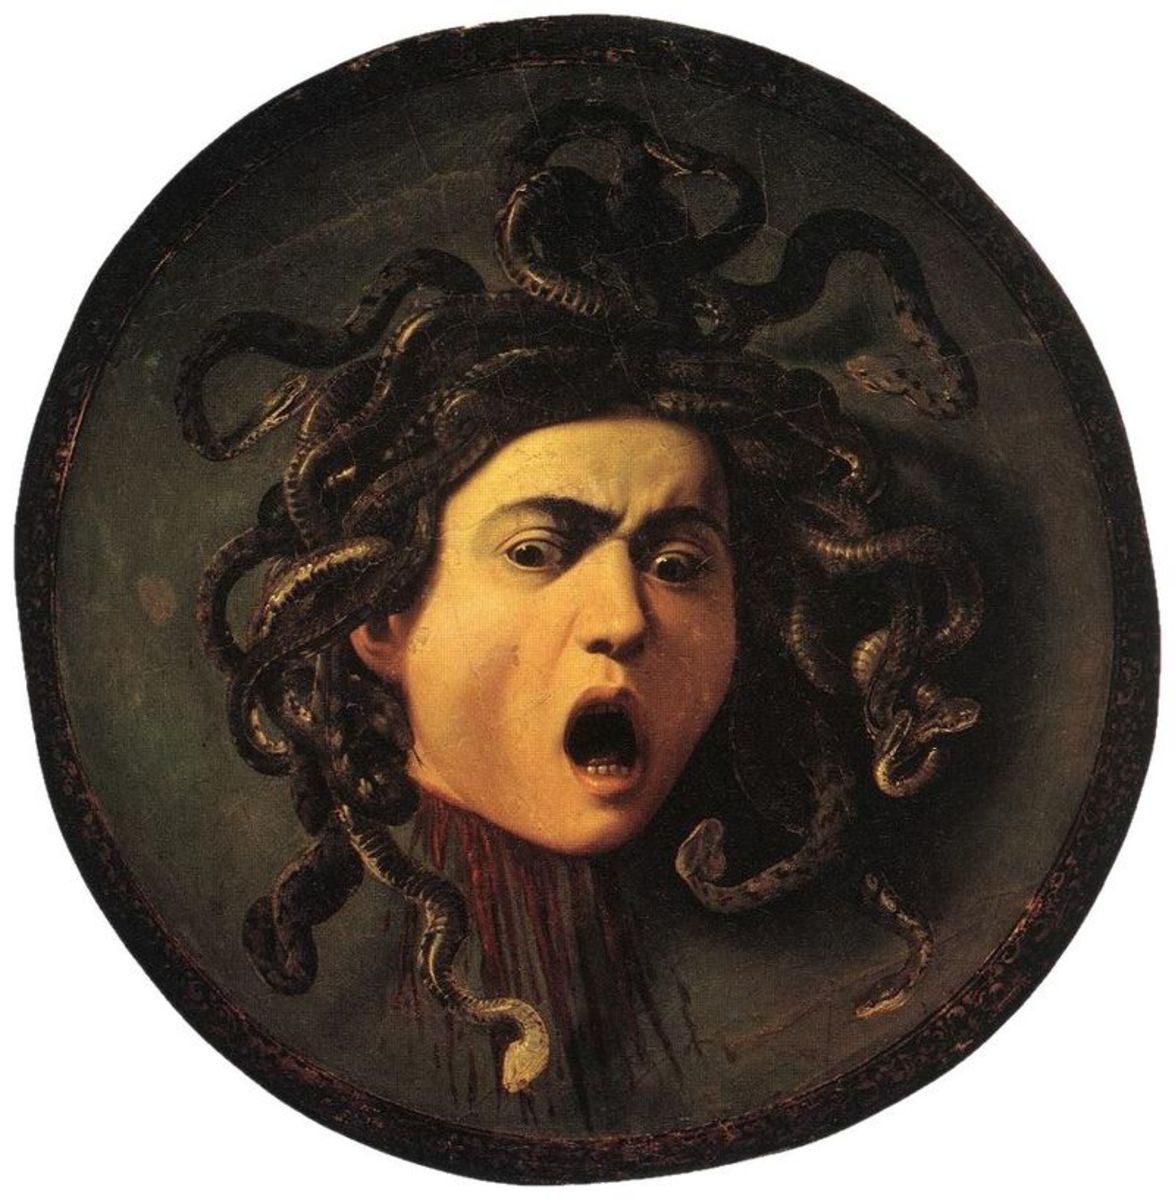 Medusa's head on Athena's shield